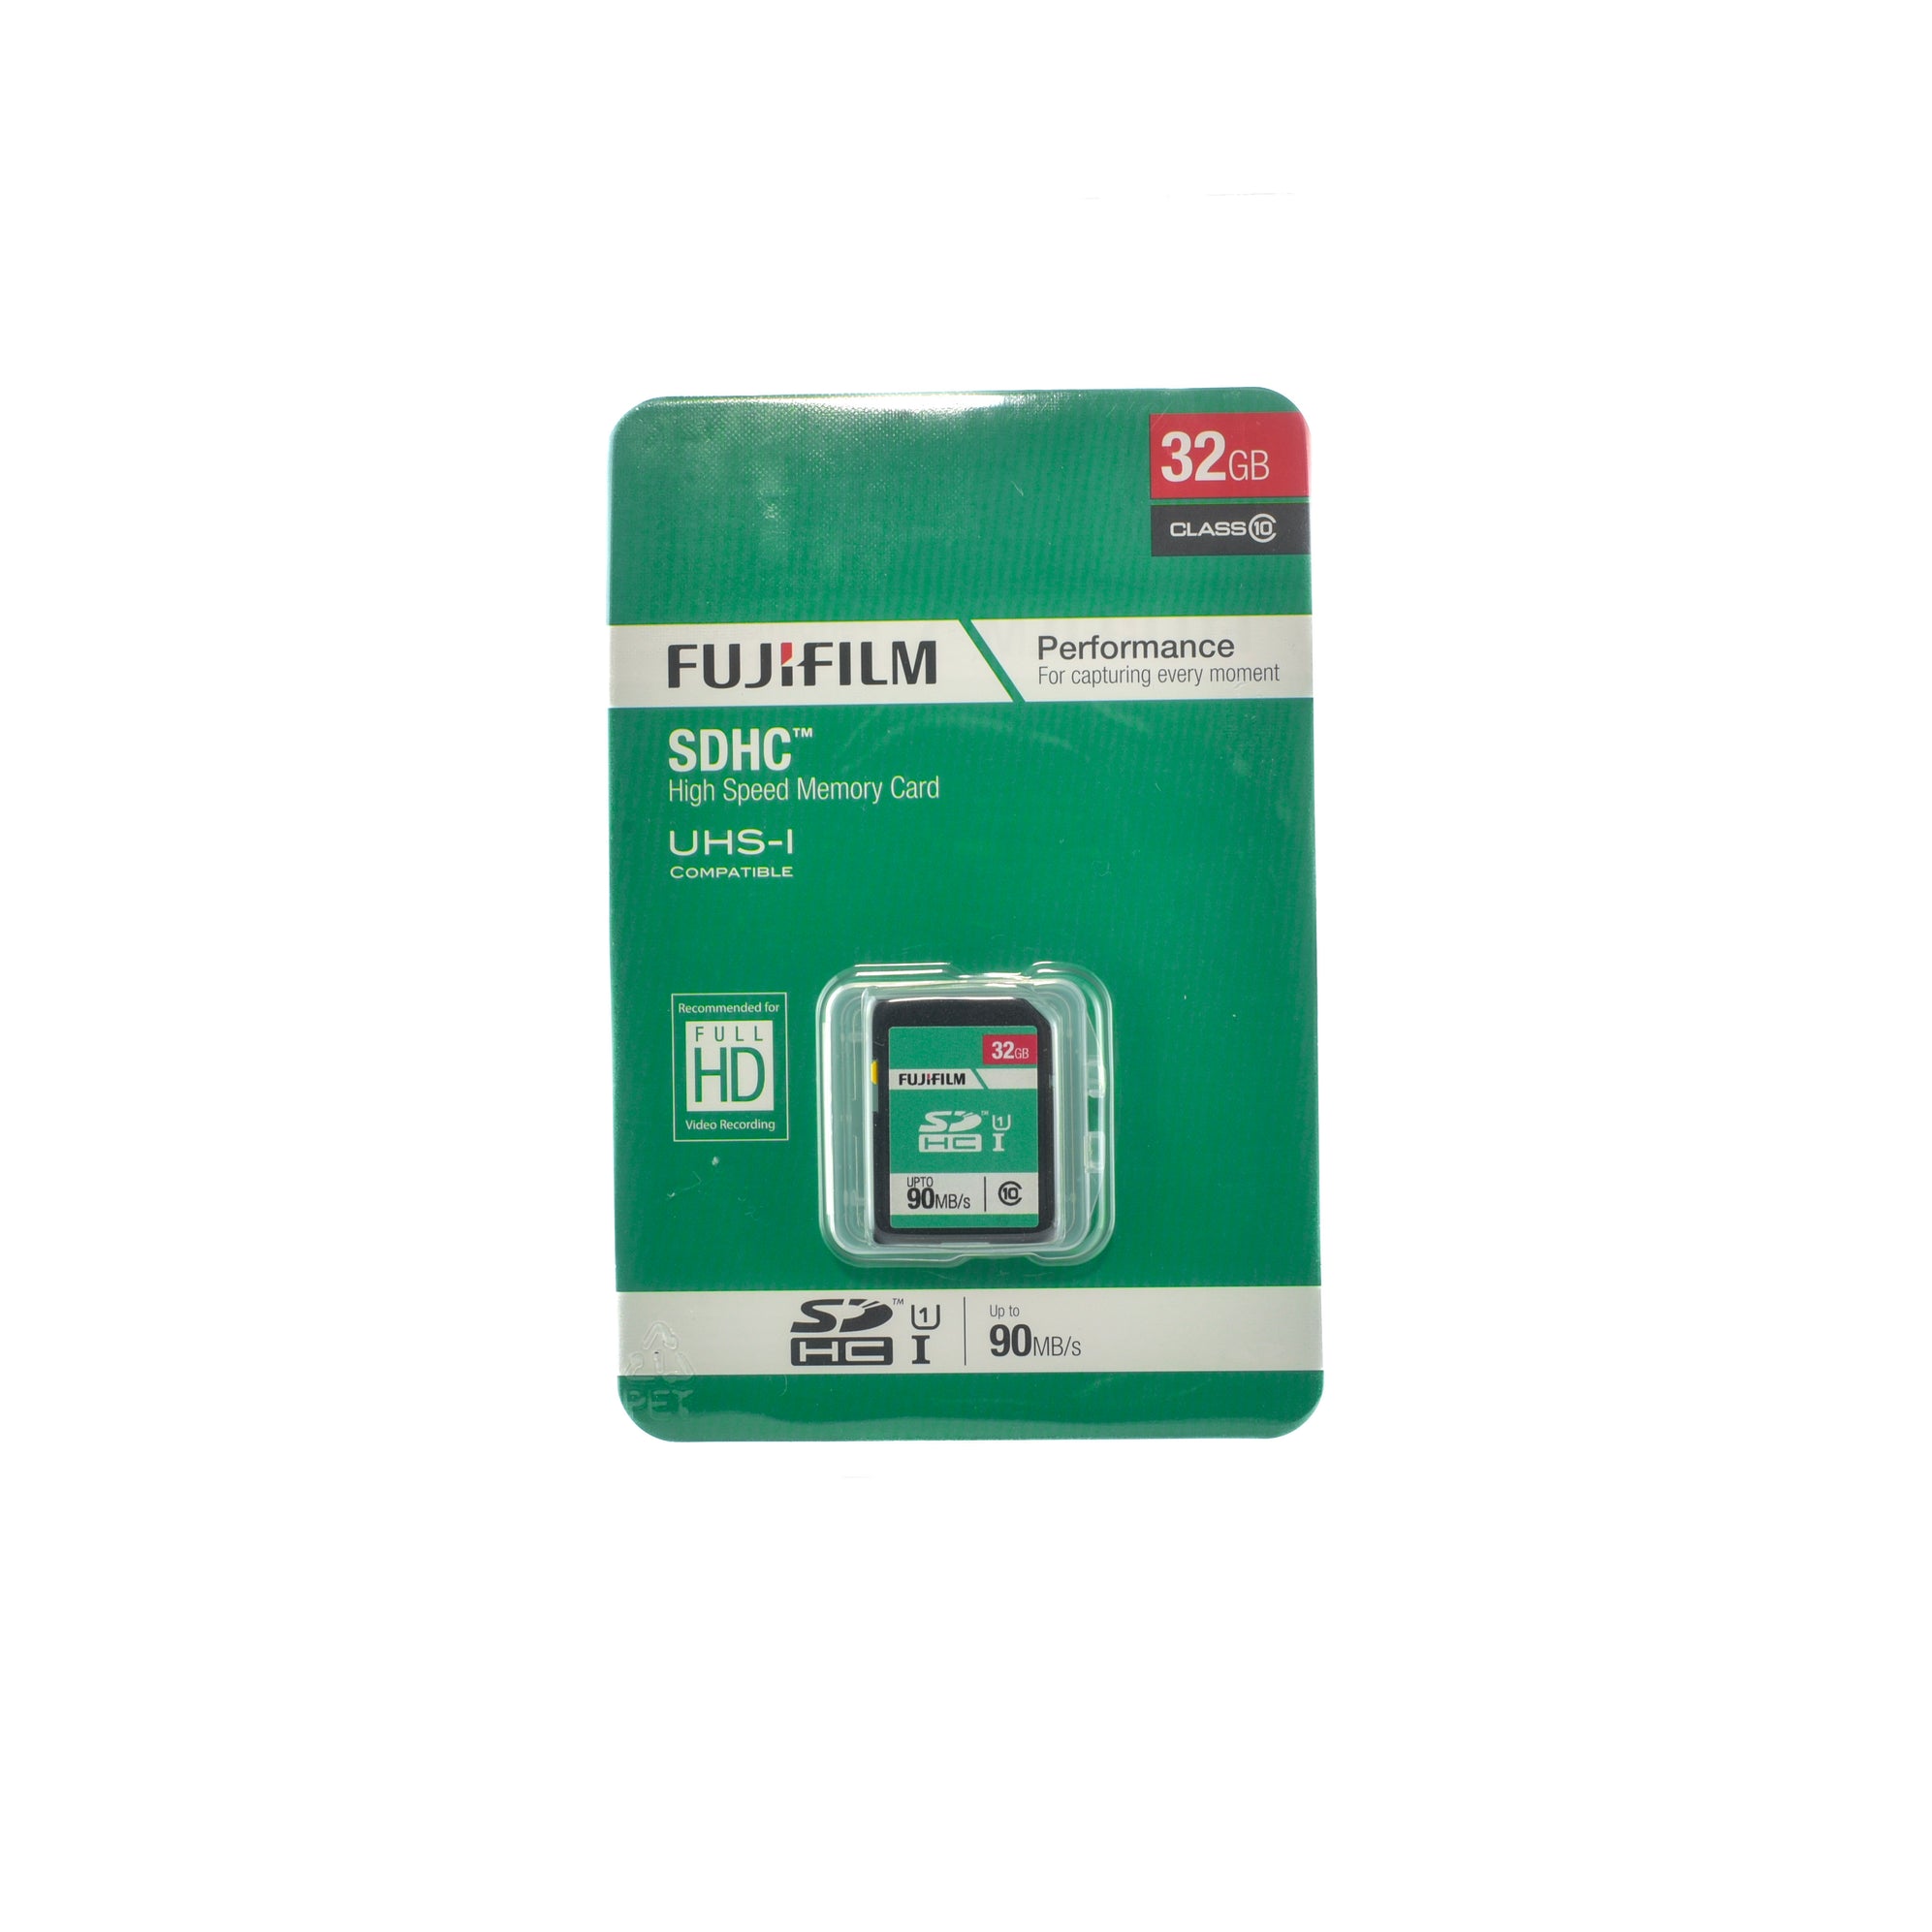 Fujifilm 32 GB SDHC Card Performance